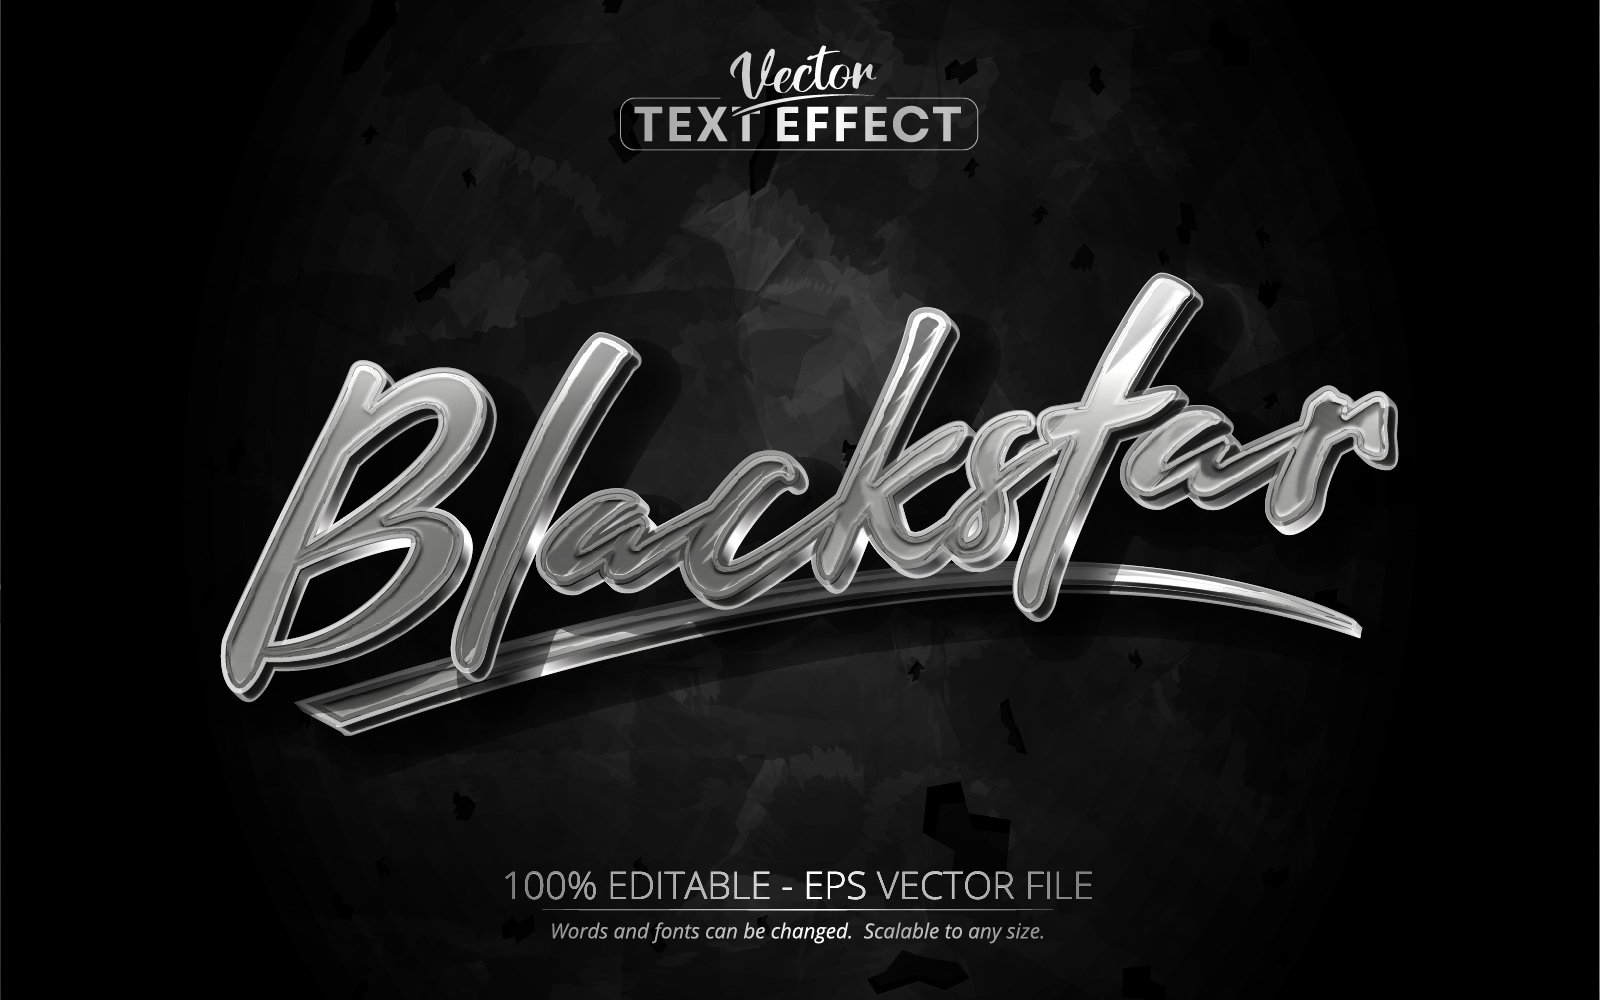 Blackstar - Editable Text Effect, Black Metallic And Silver Text Style, Graphics Illustration